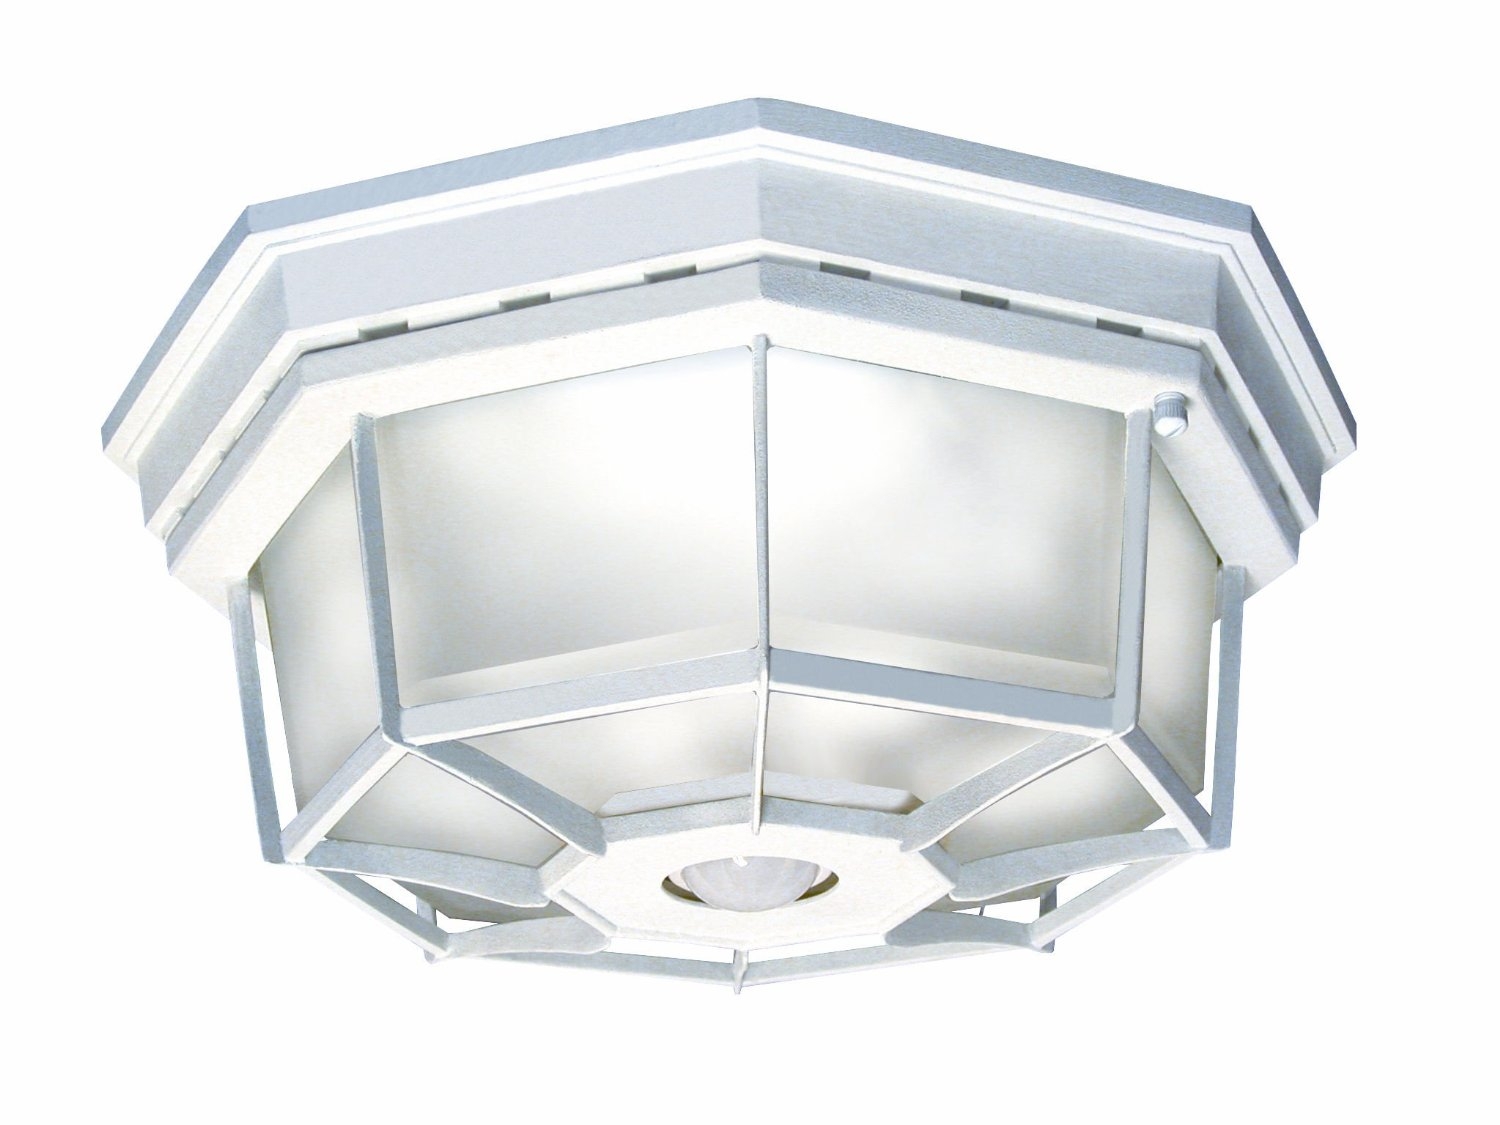 Motion Sensor Outdoor Ceiling Light Fixture